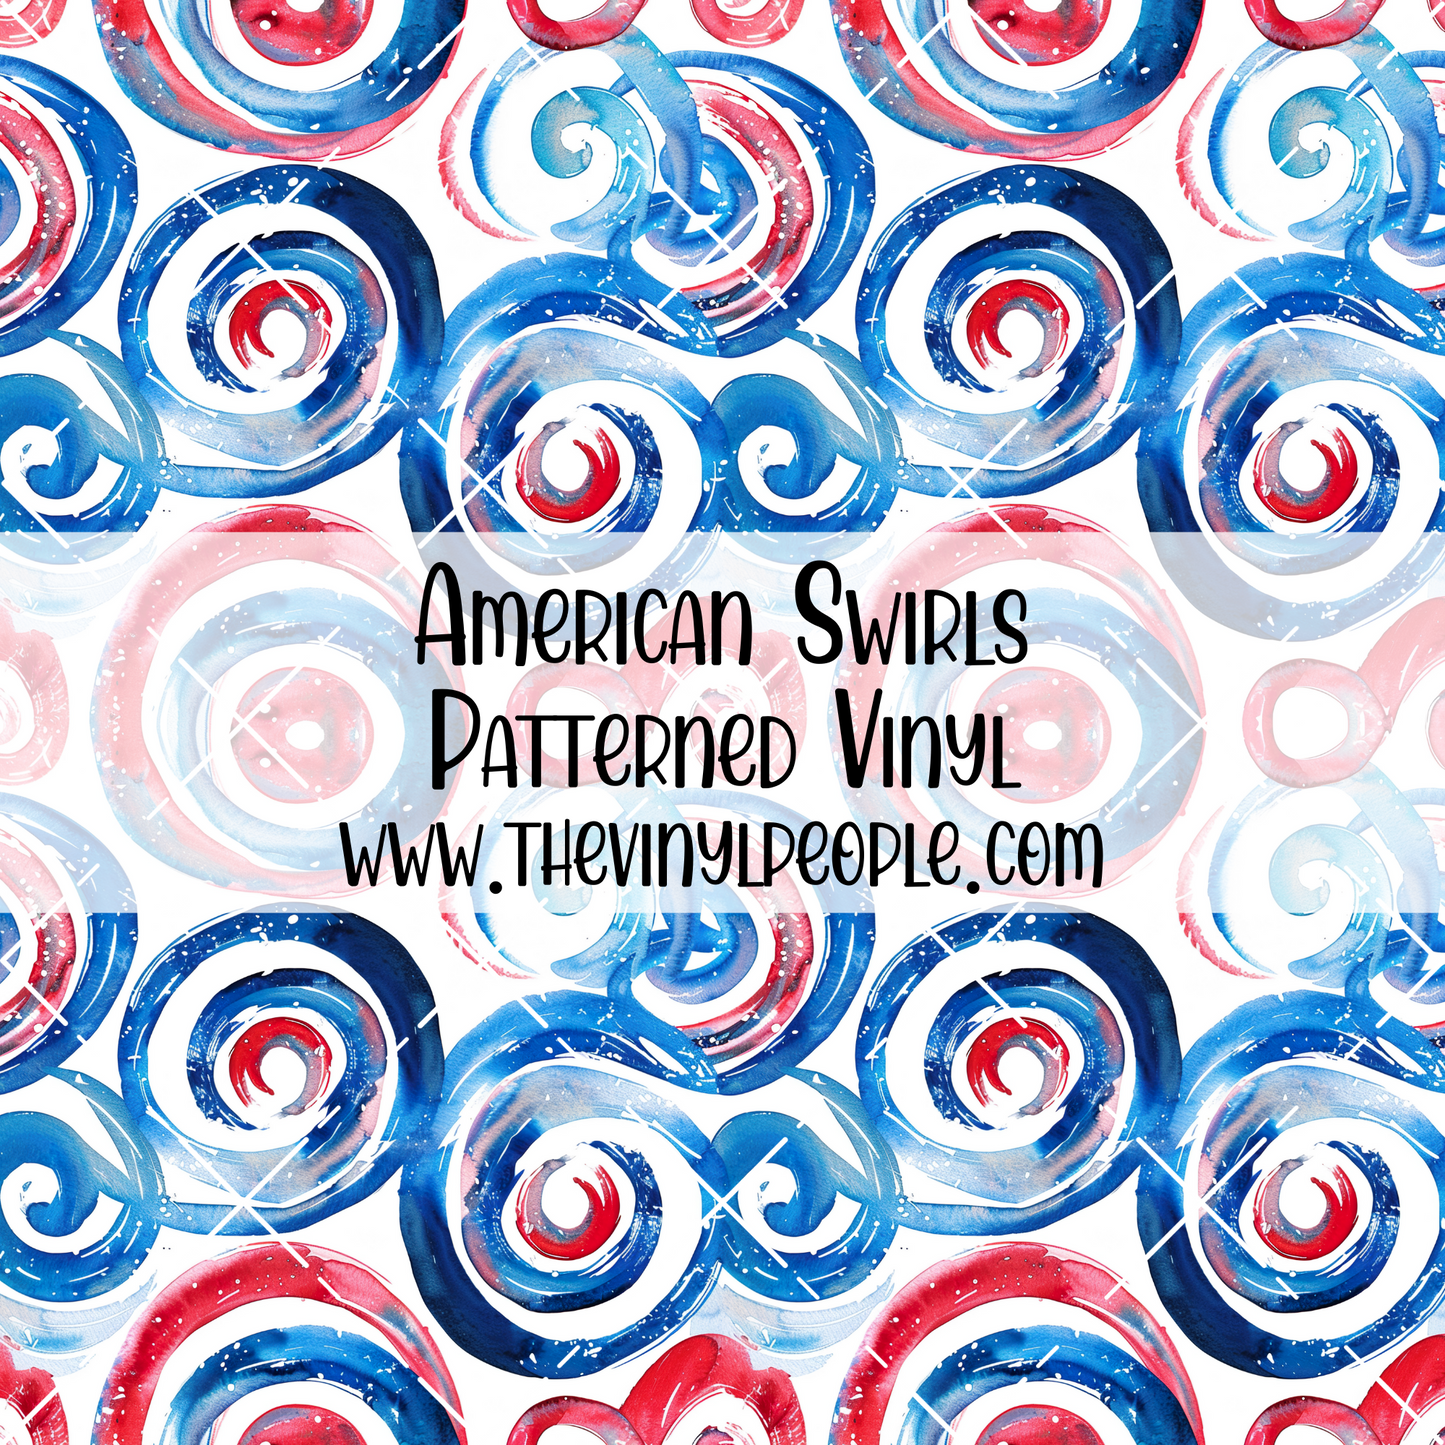 American Swirls Patterned Vinyl